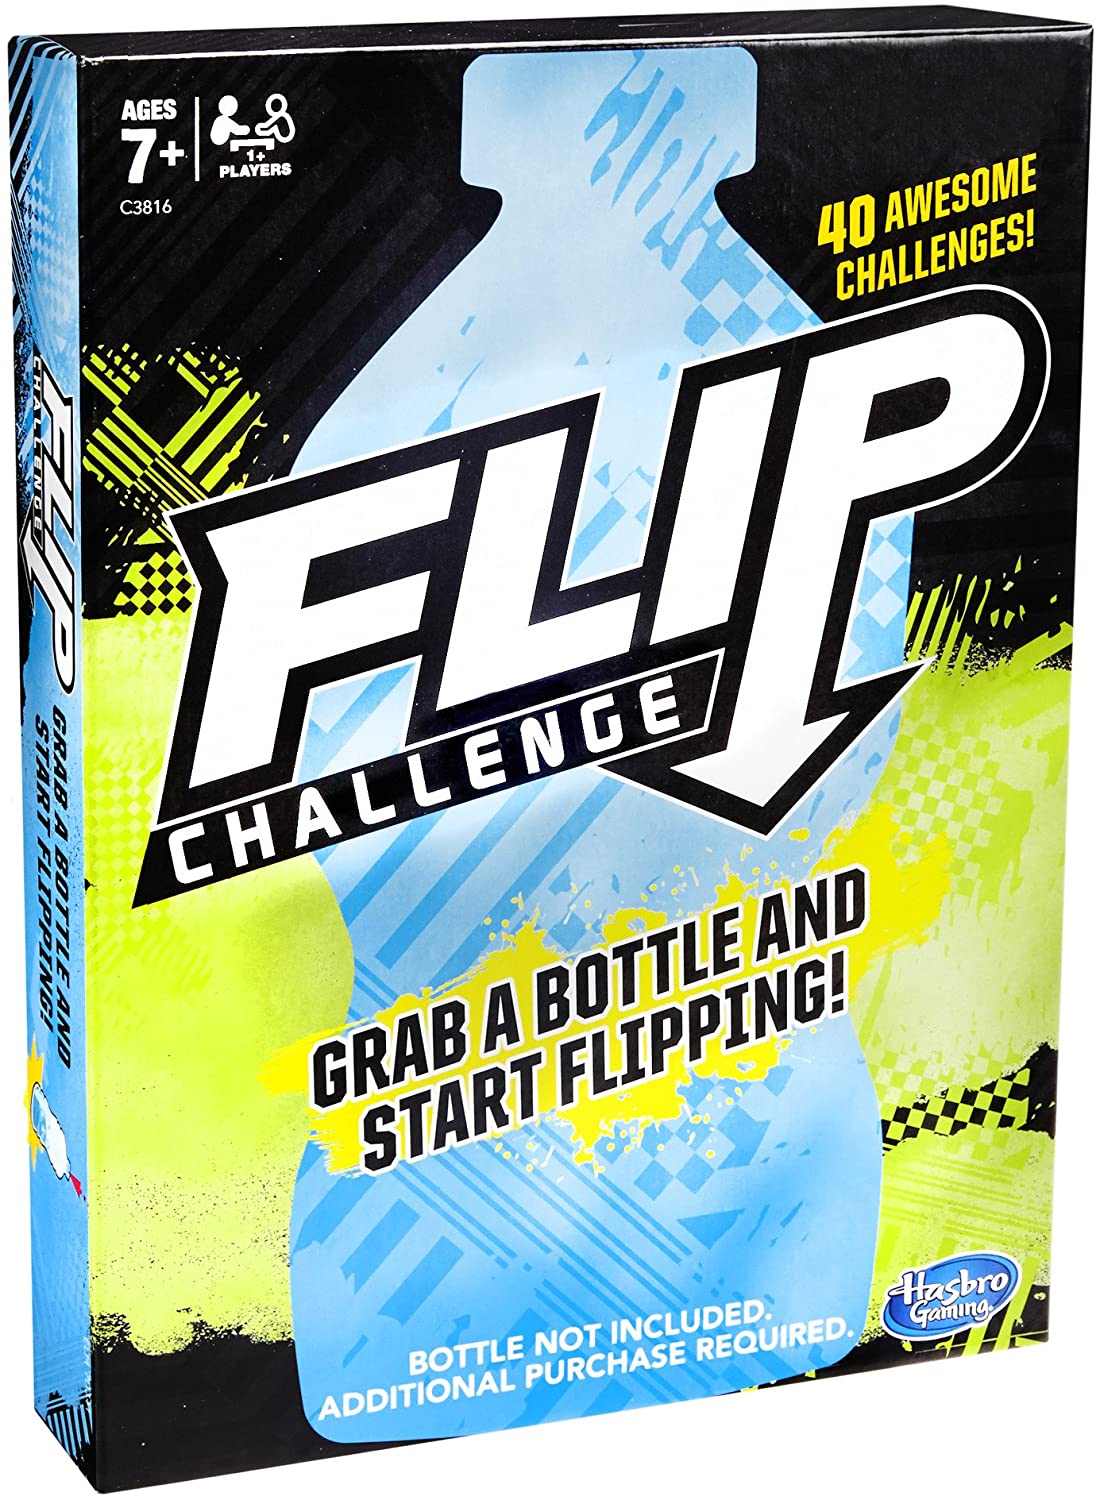 Flip Challenge